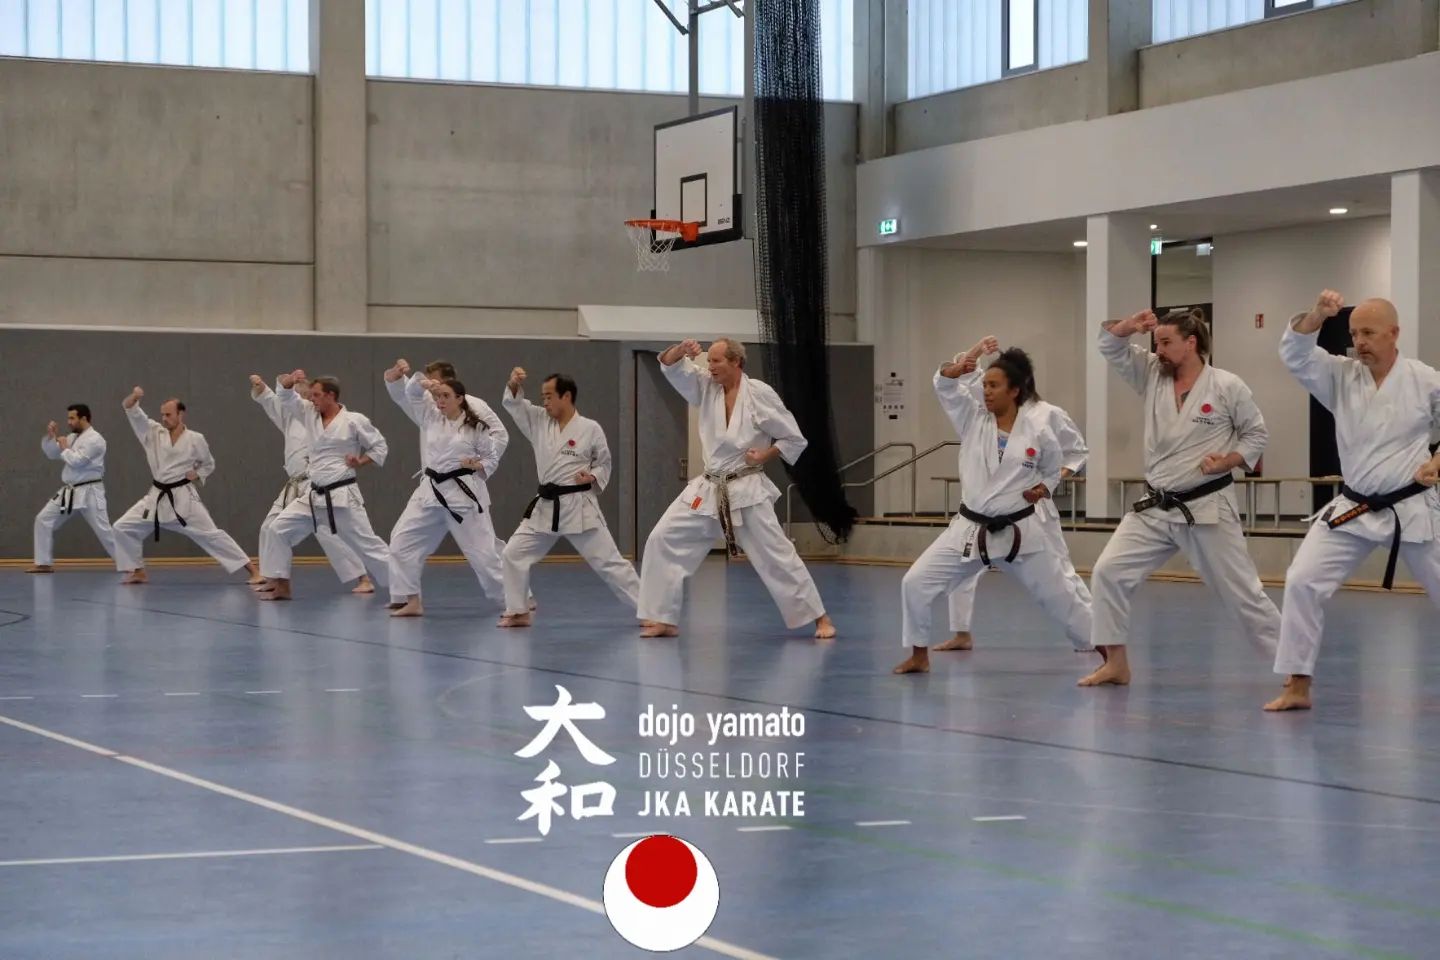 Lehrgang im Dojo Yamato Düsseldorf e.V. 🥋
Bild: René Winkler 
.
.
.
.
.
.
.
#karate #training #fun #jka #djkb #kihon #kata #kumite #düsseldorf #duesseldorf #japan #sport #sportmotivation #shotokan #traditional #nrw #yamatoduesseldorf #fitness #fitnessmotivation #jkaKarate #jkakaratedo #neuss #ratingen #hilden #leverkusen #kaarst #selbstbstbewusstsein #selbstvertrauen